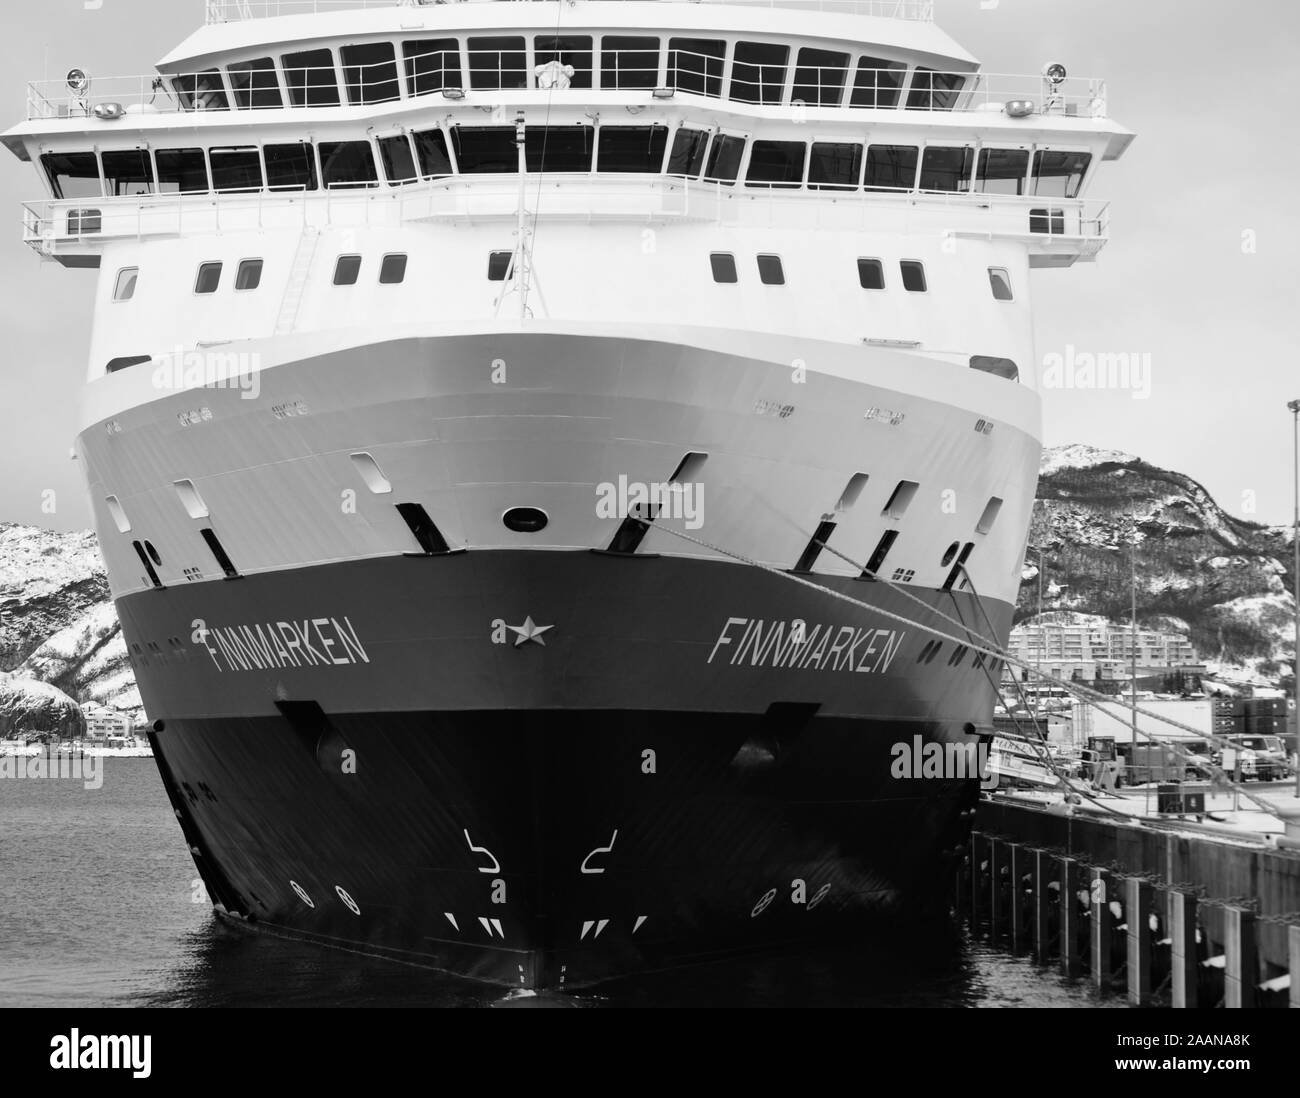 Bodø Norway March 19 2017: Black and White Hurtigruten cruise ship MS Finnmarken docked Stock Photo